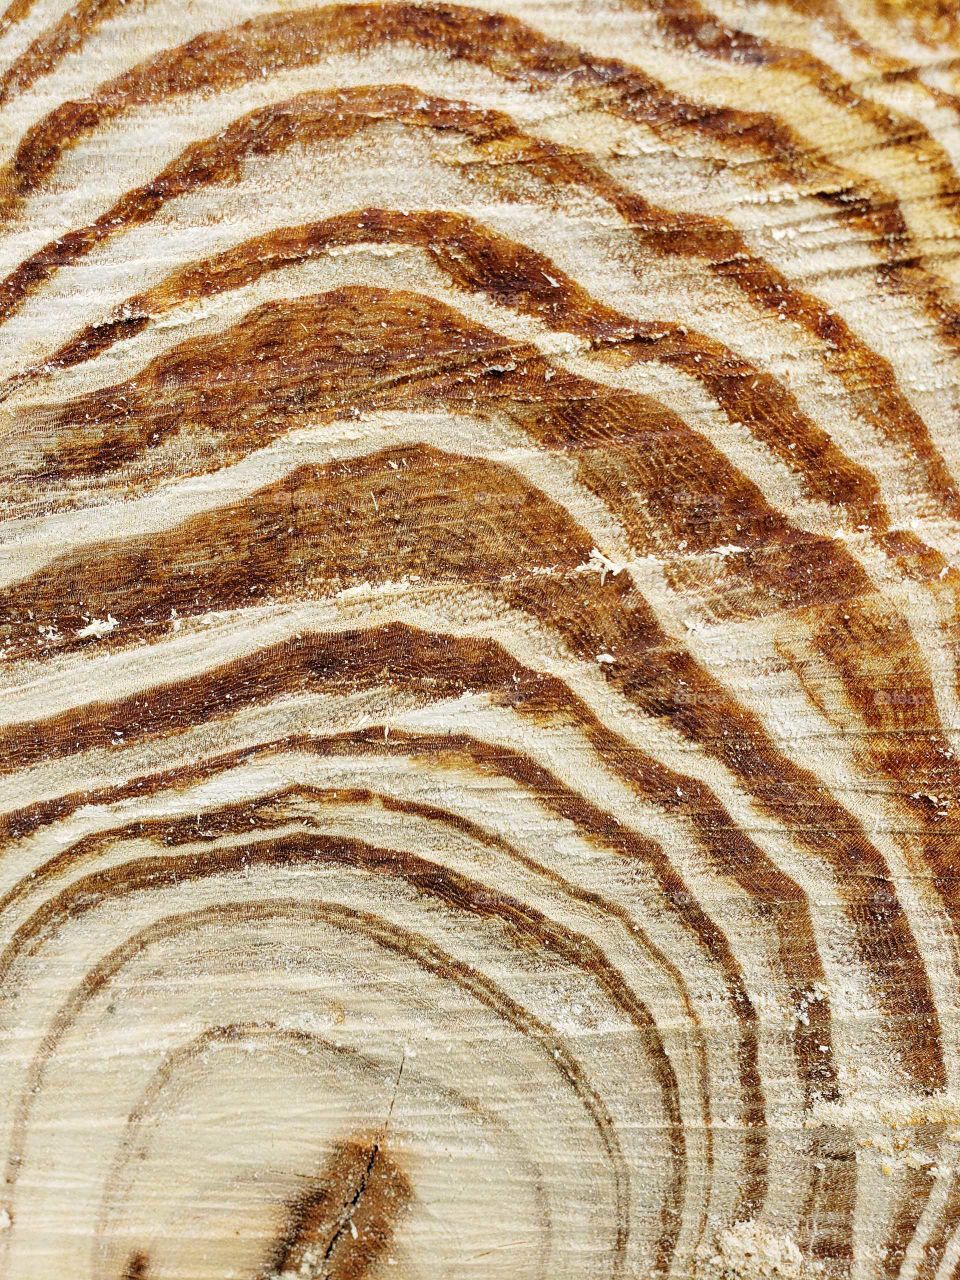 tree stump rings